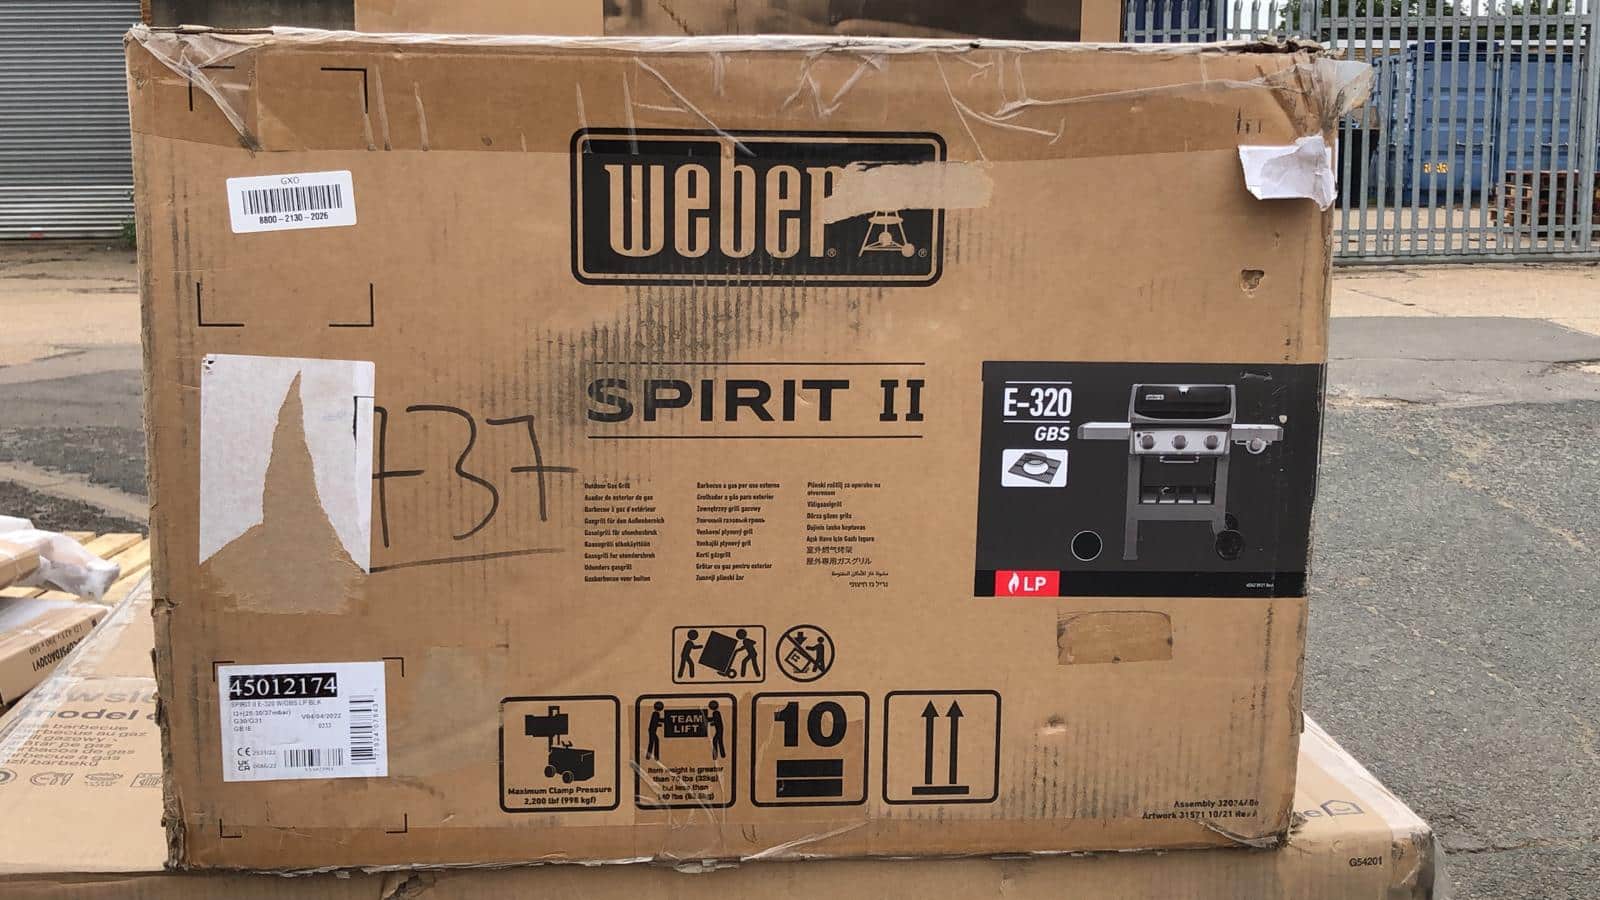 Weber Spirit II E-320 GBS - Black (45012174) Gas Barbecue 3202